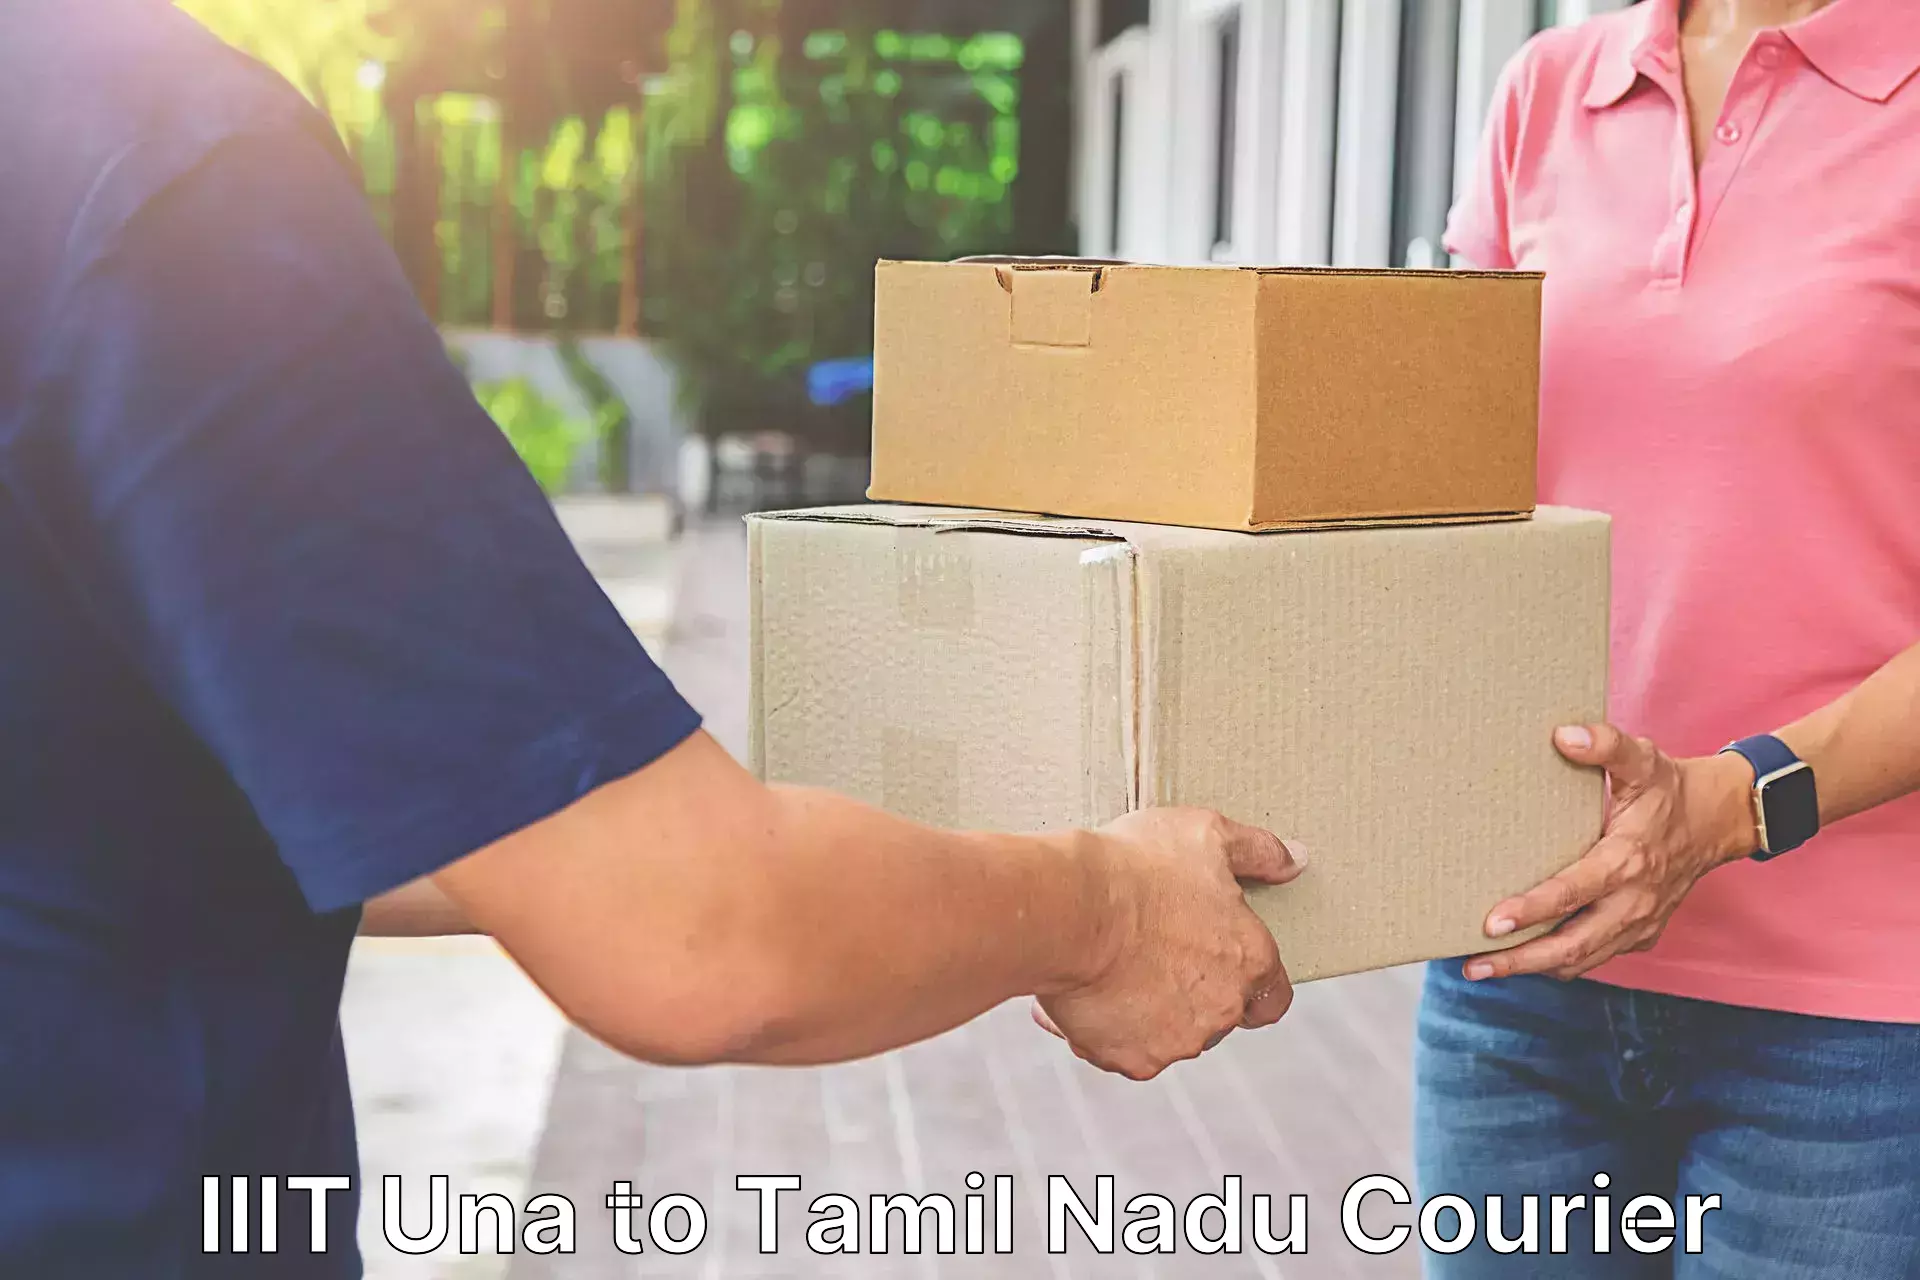 Cash on delivery service IIIT Una to Tamil Nadu